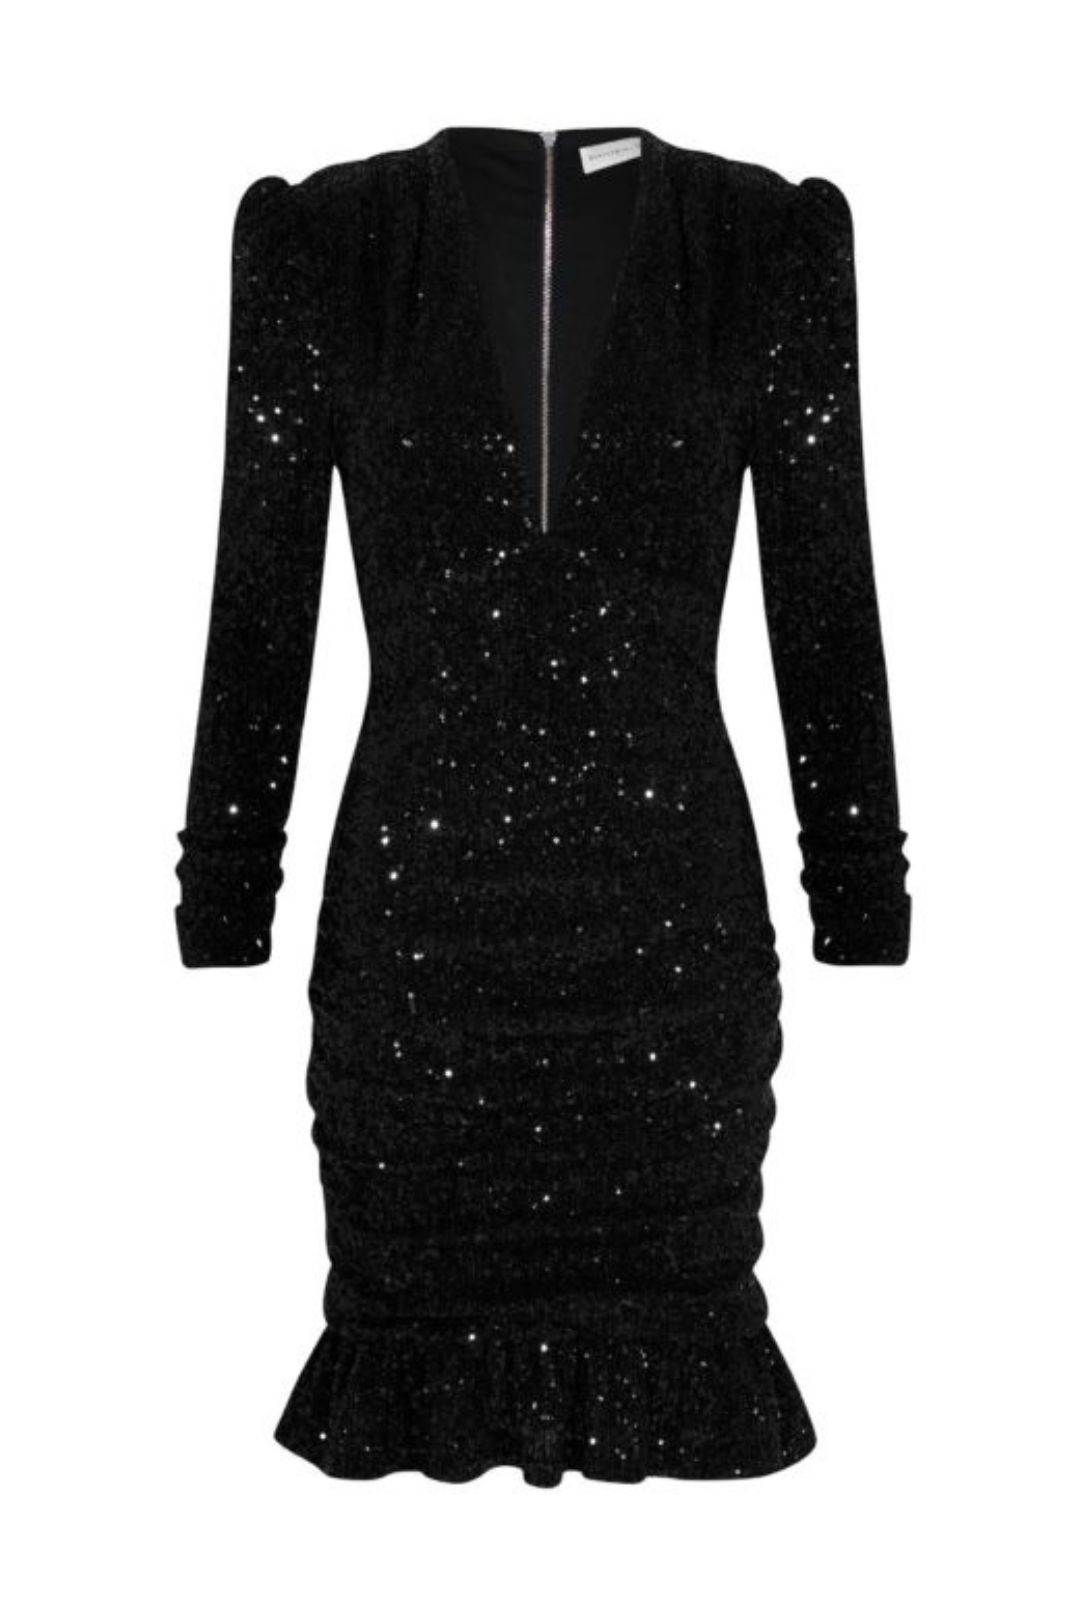 Sequin Dresses Australia | Glittery, Sparkly Dresses | GlamCorner